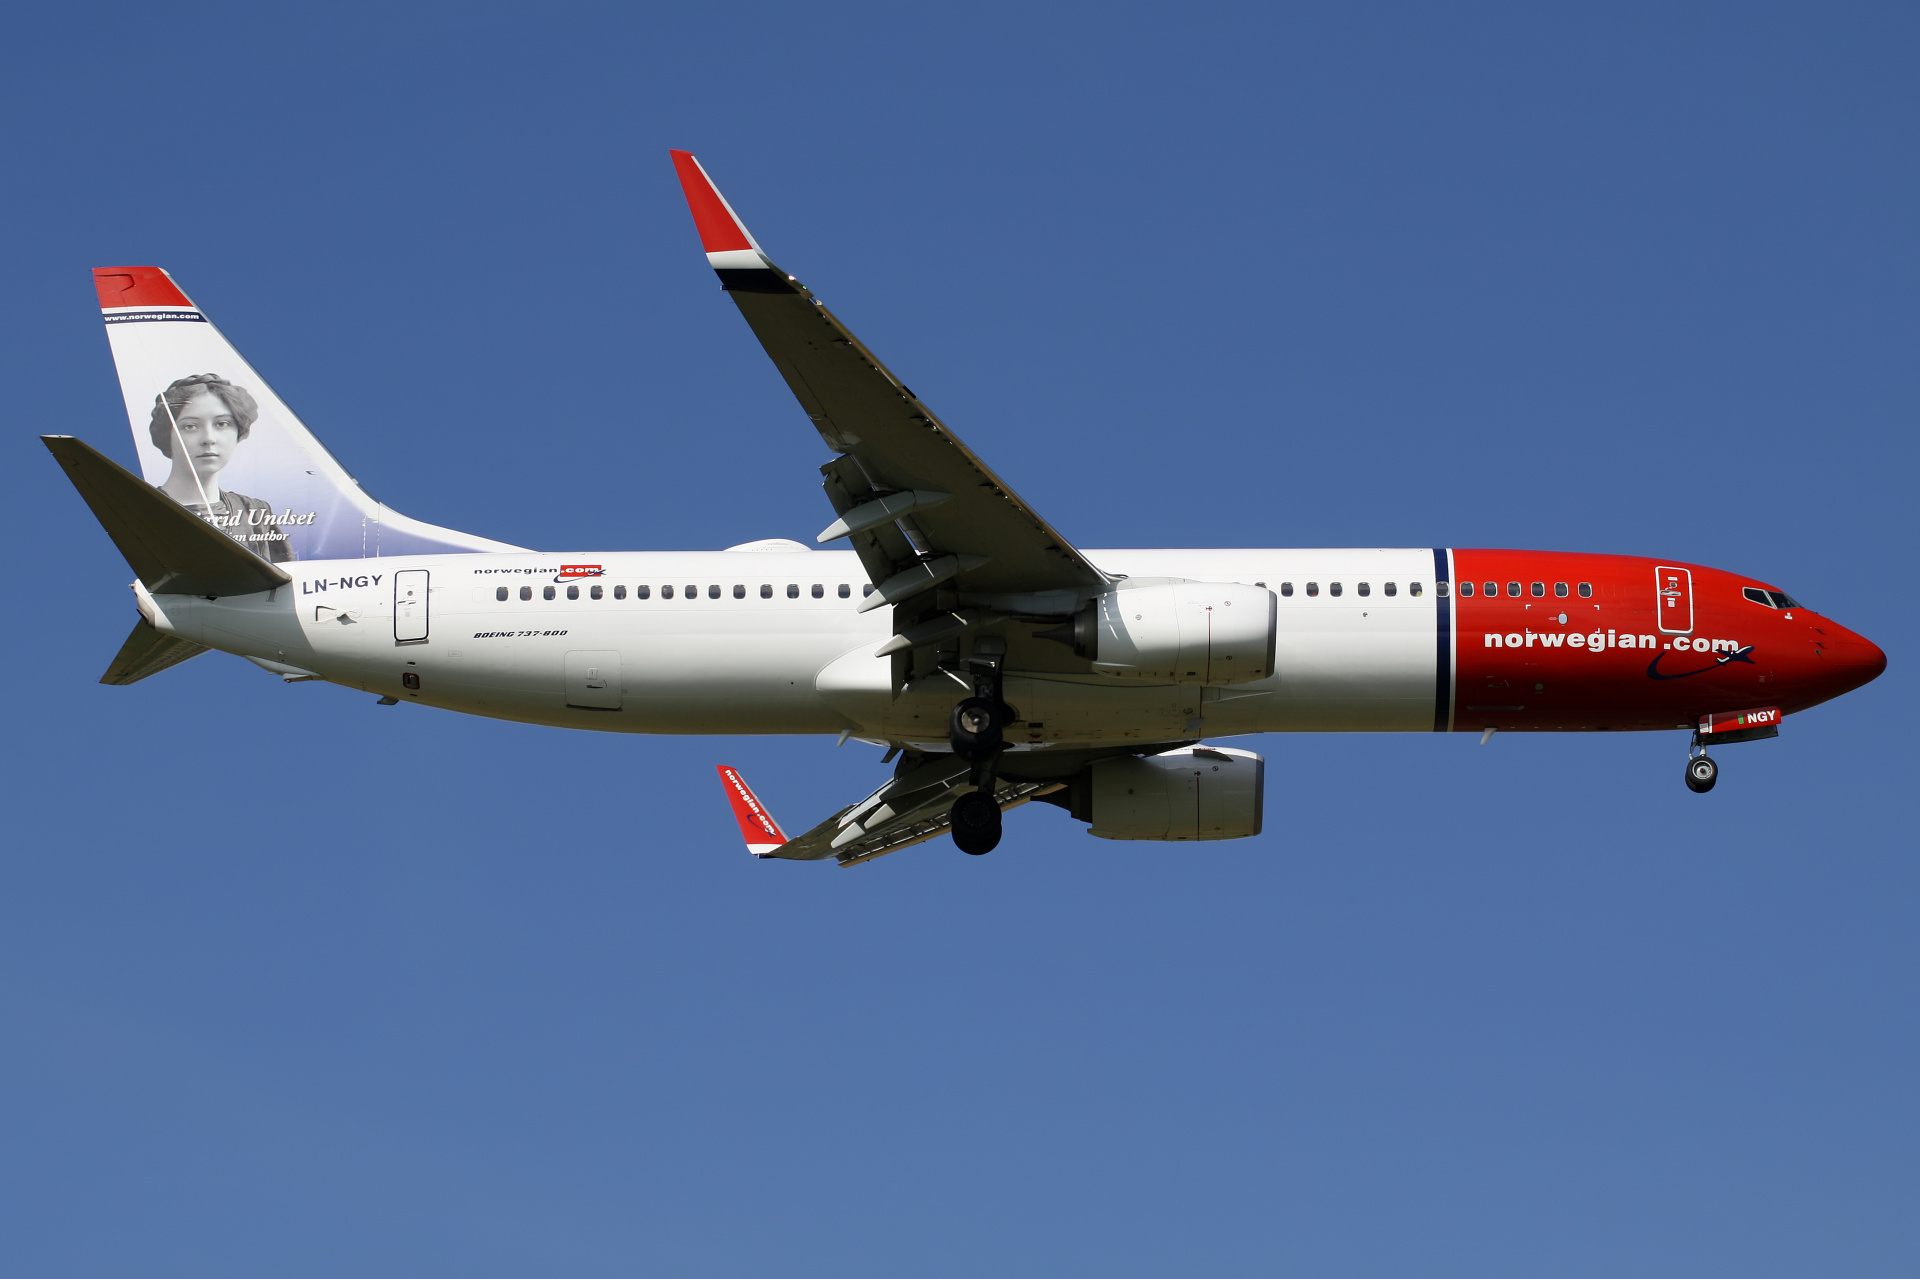 LN-NGY, Norwegian Air Shuttle (Aircraft » EPWA Spotting » Boeing 737-800 » Norwegian Air)